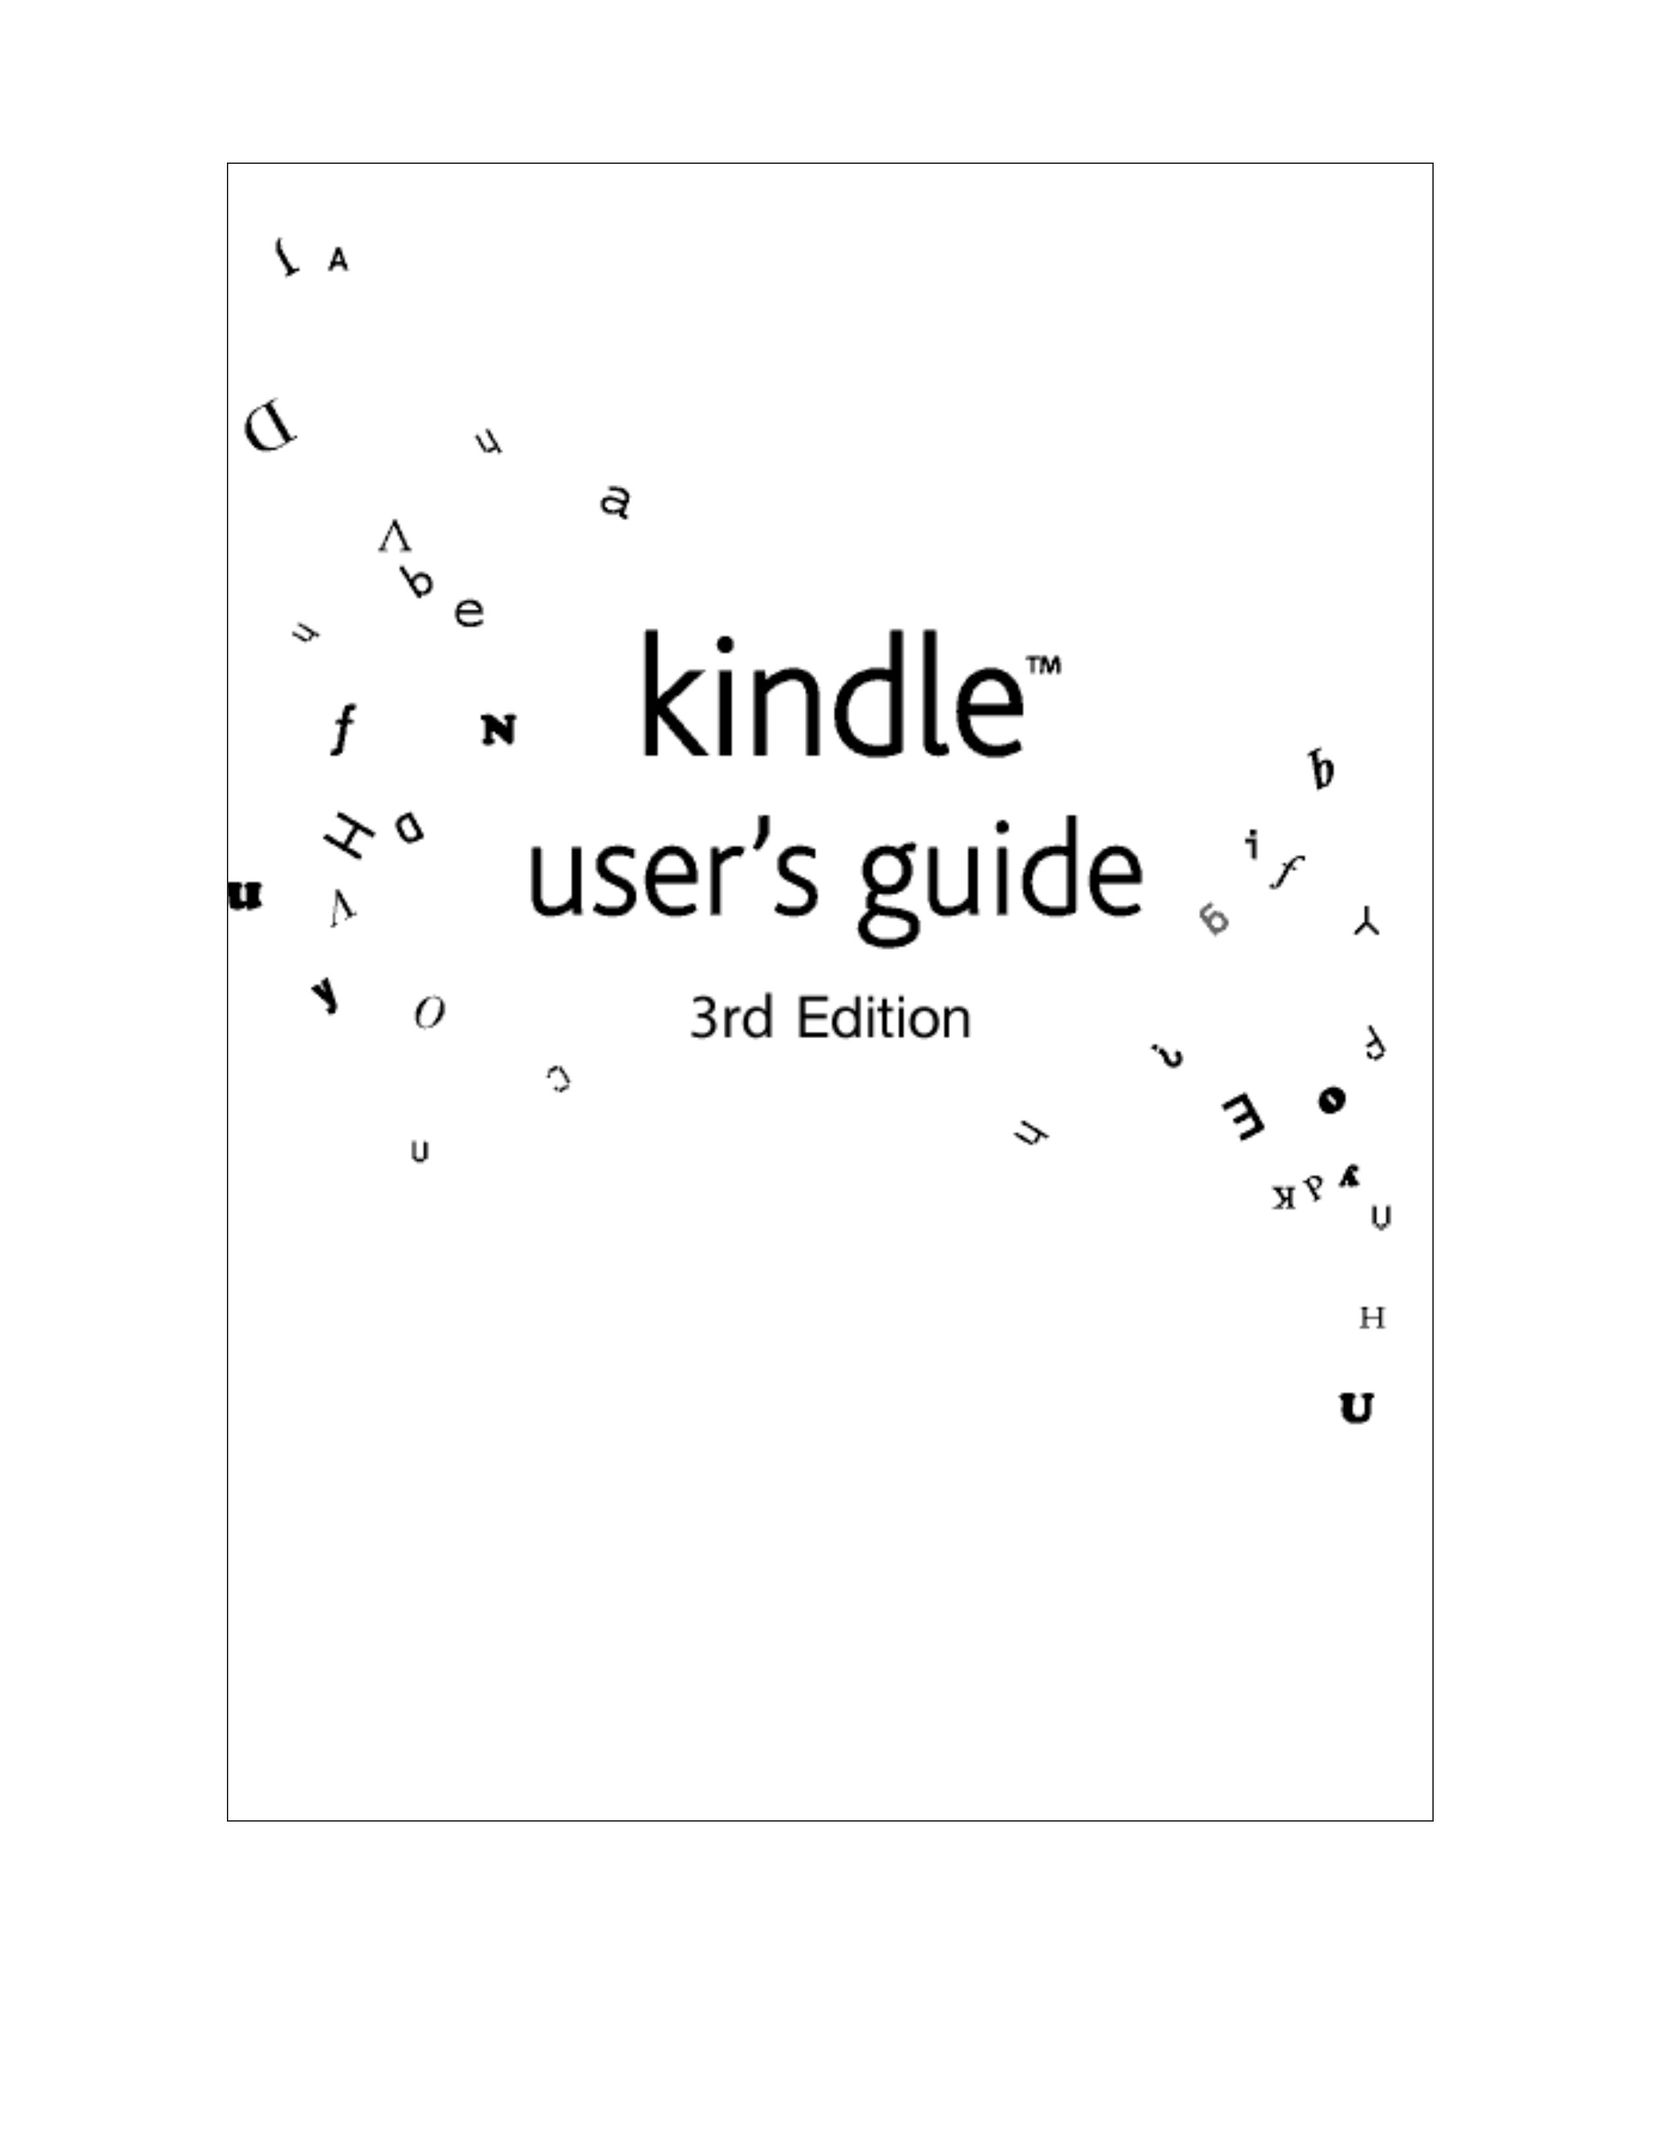 Amazon KNDWIFI eBook Reader User Manual